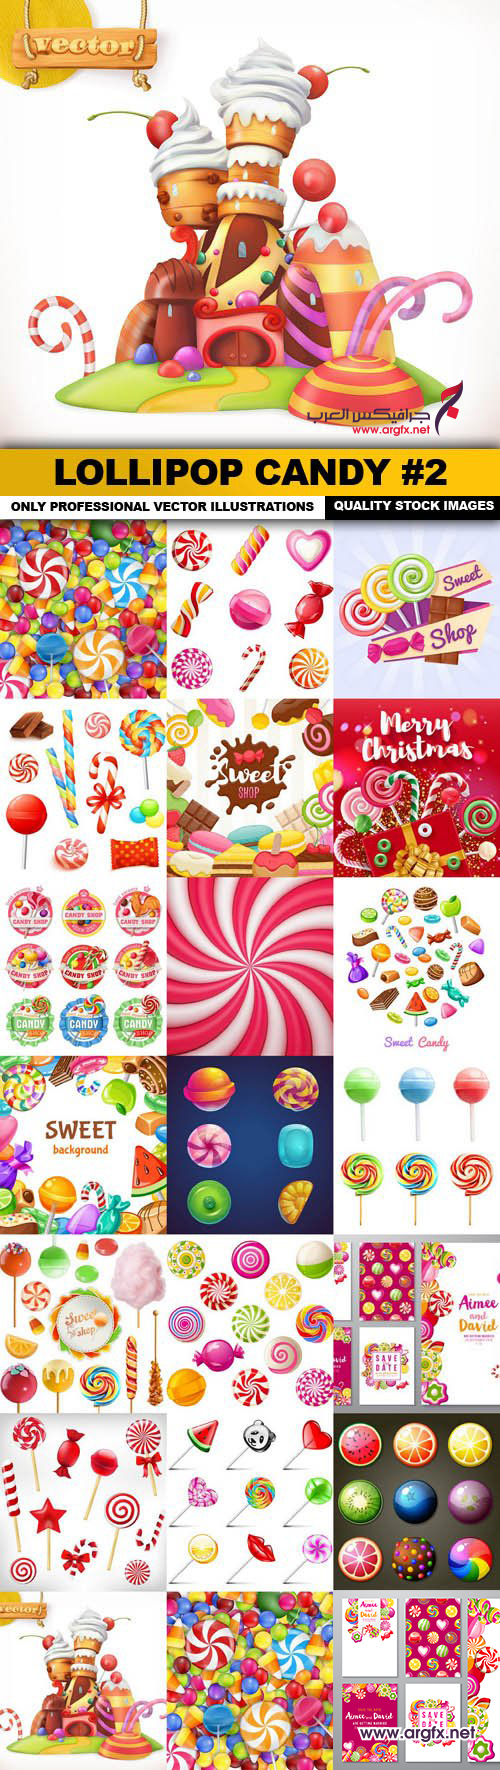 Lollipop Candy #2 - 20 Vector